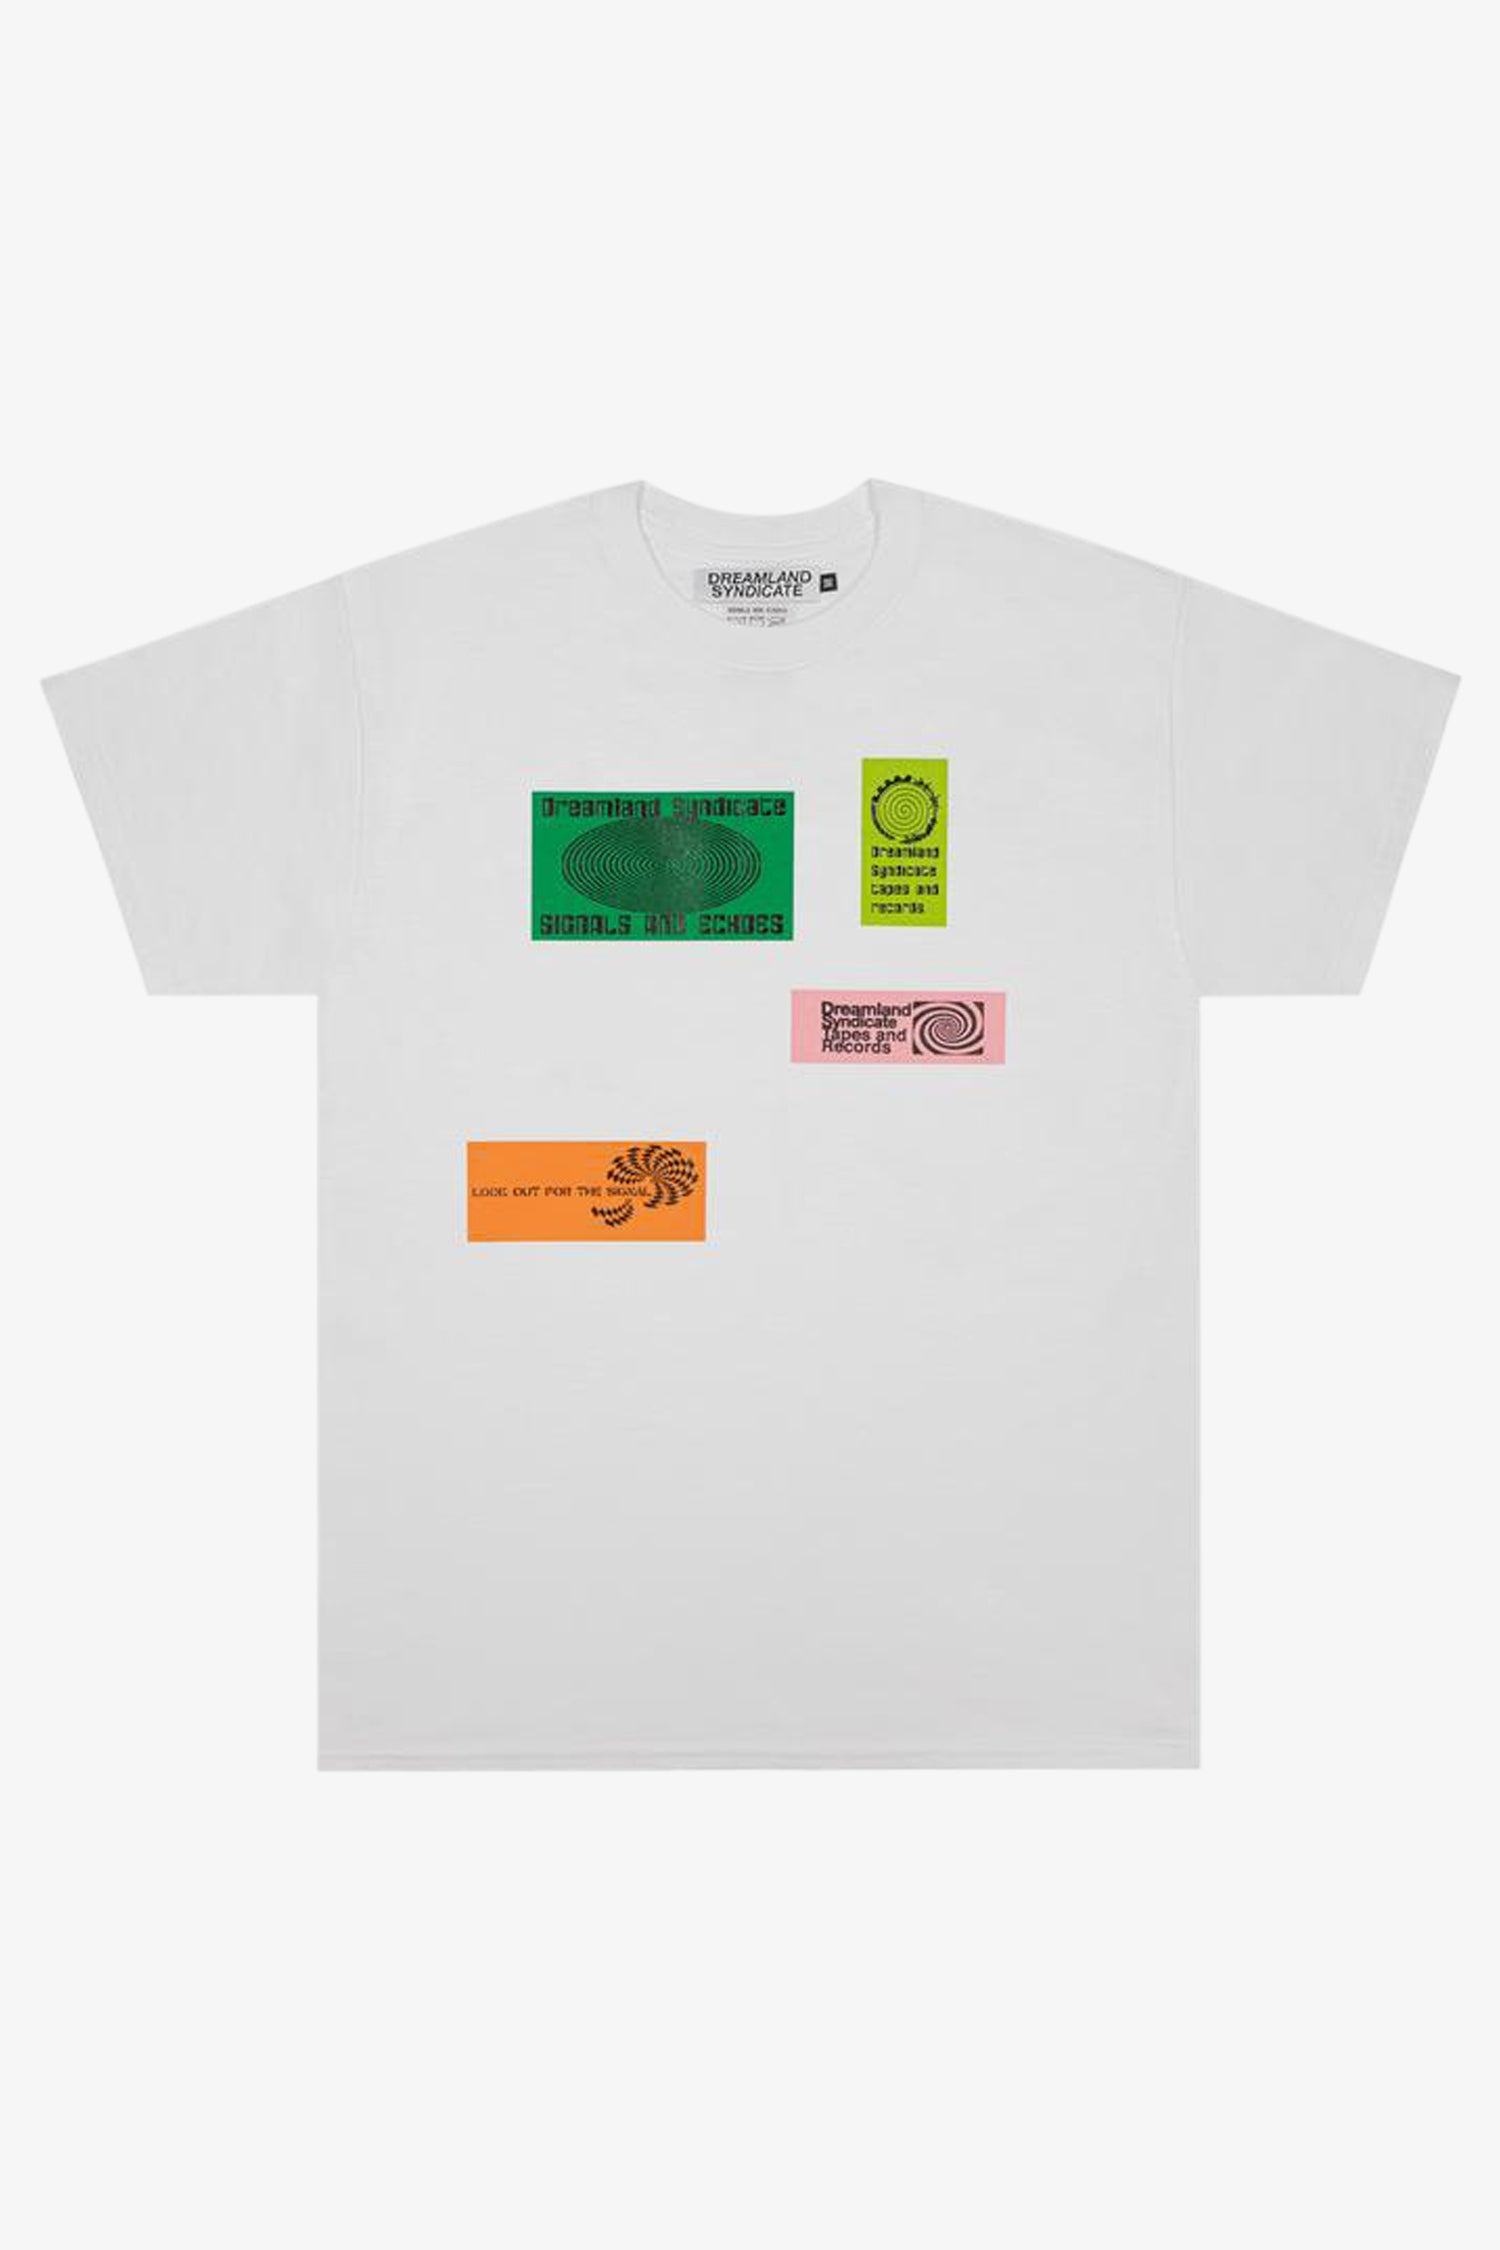 Selectshop FRAME - DREAMLAND SYNDICATE Signals/Echoes Tee T-Shirts Dubai